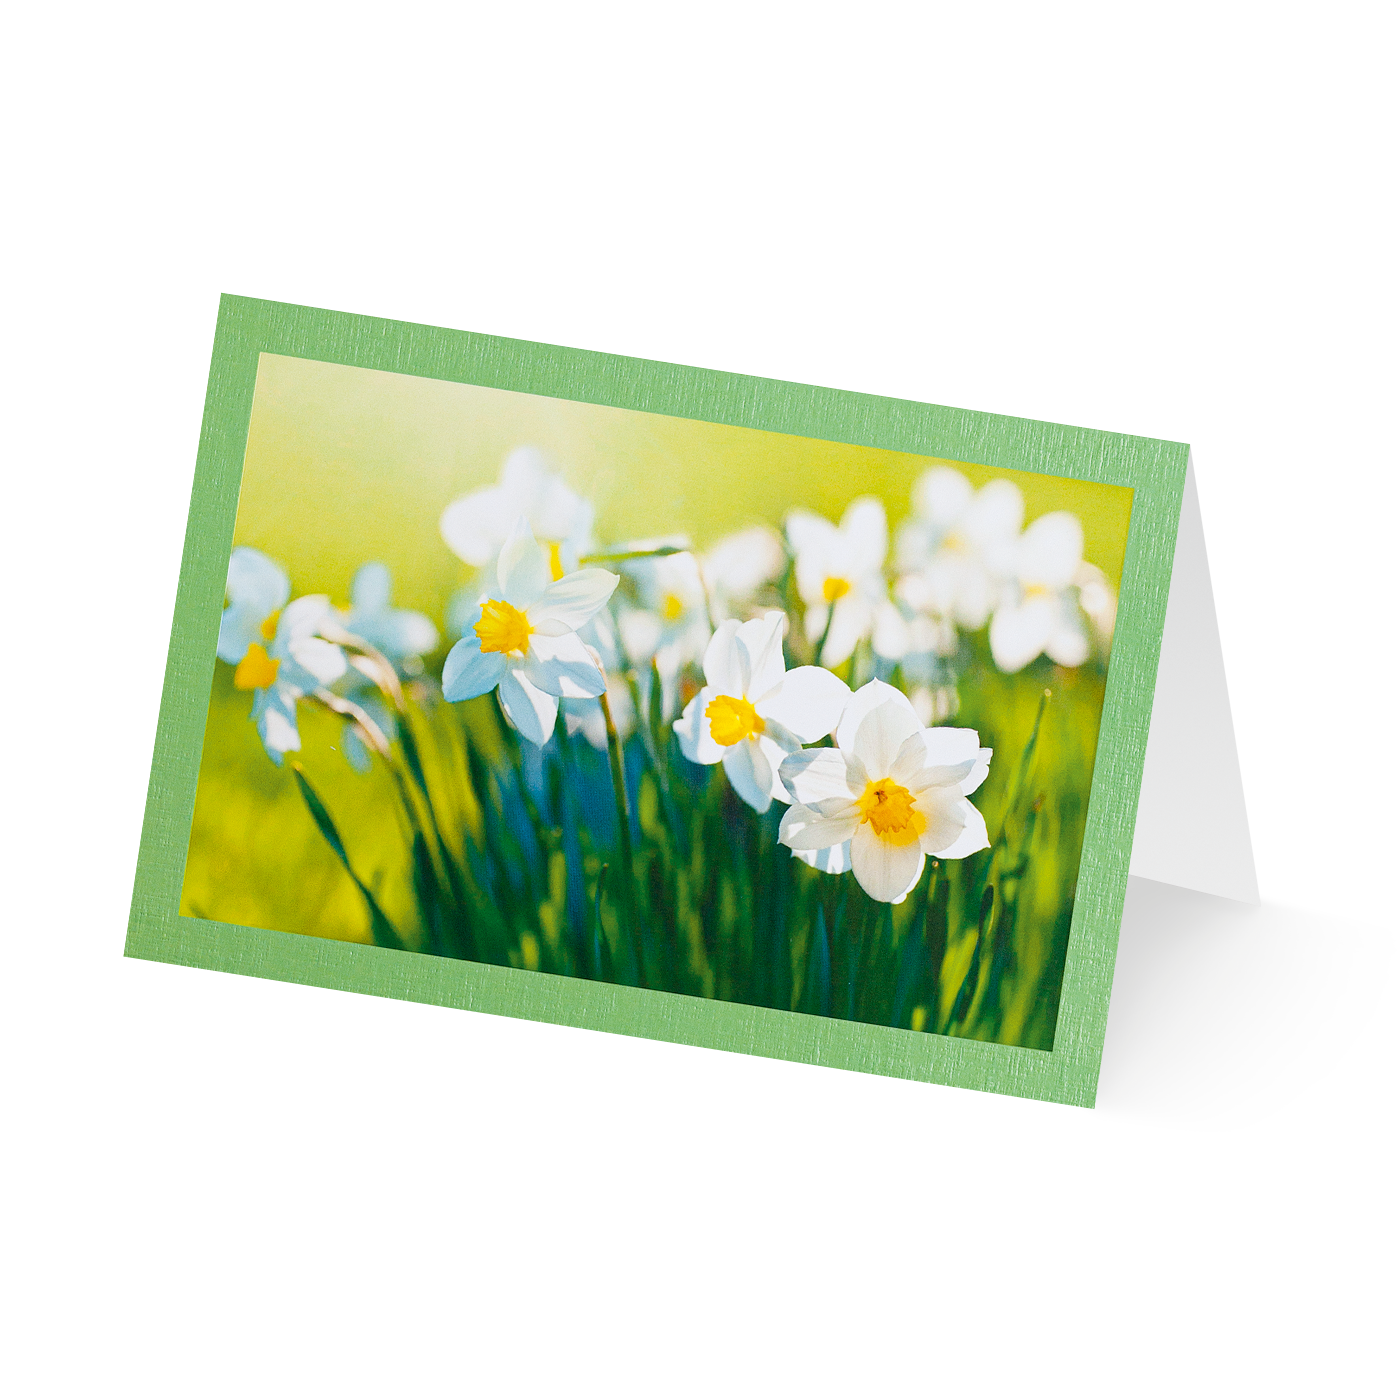 Grußkarte „Erste Frühjahrsblüten“ kaufen im UNICEF Grußkartenshop. Bild 6